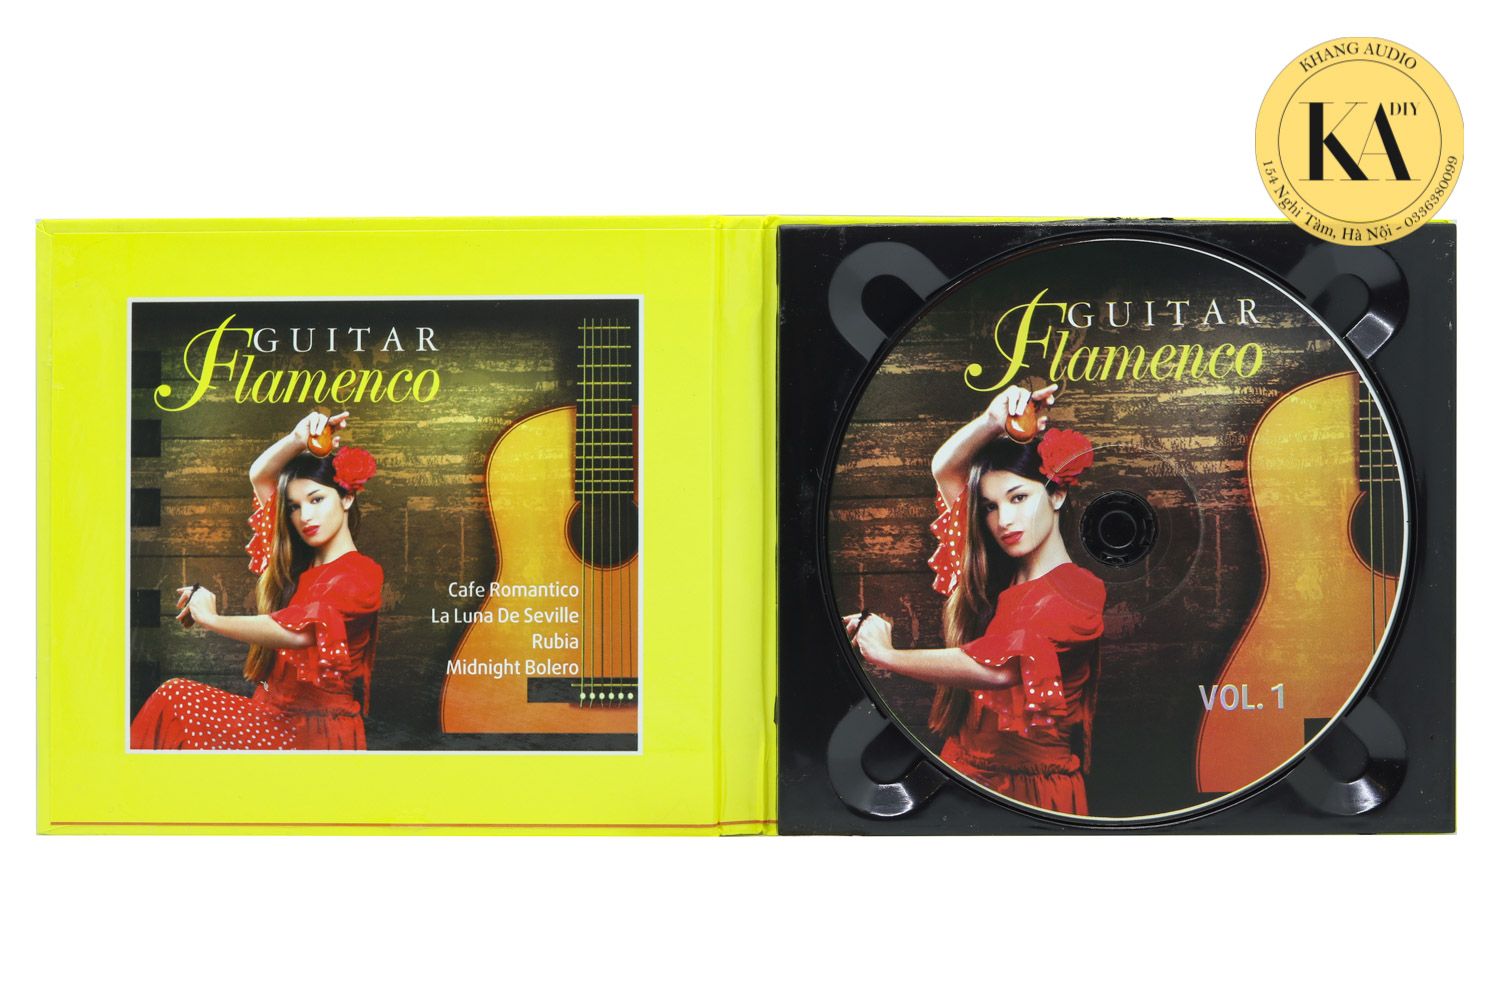 Guitar Flamenco Khang Audio 0336380099